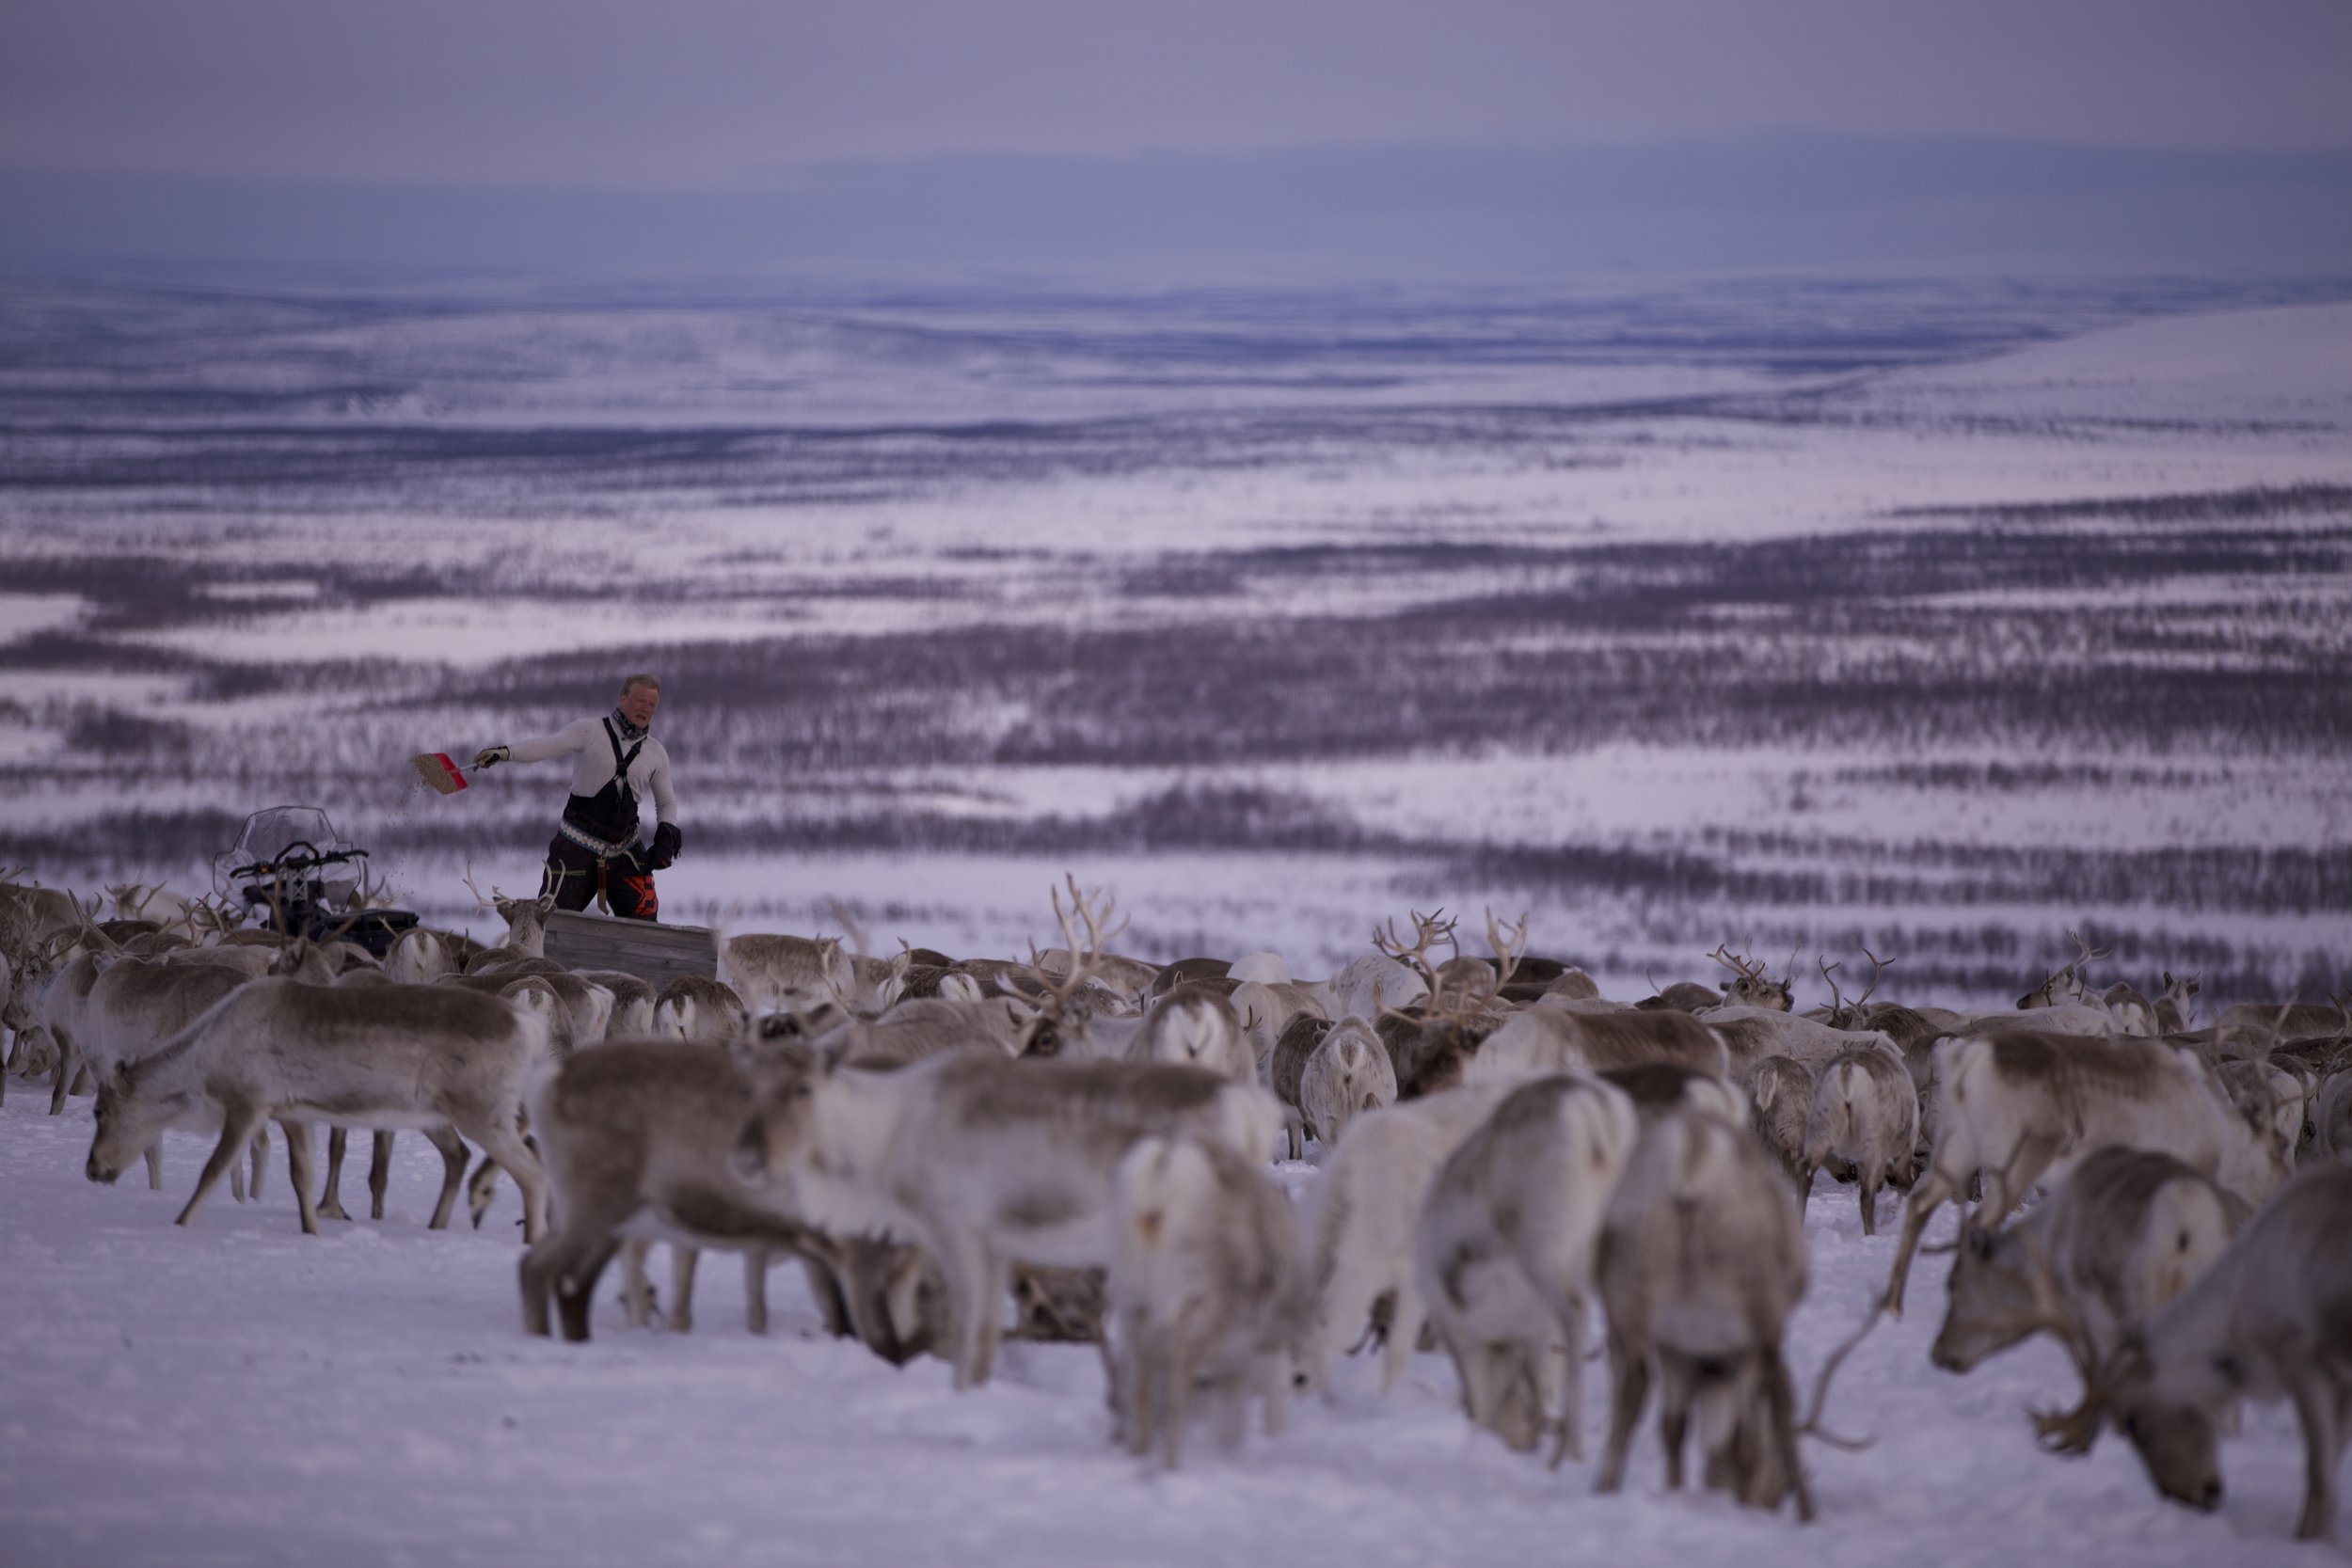 TrixPix-Cumhachd a' Yoik-Inga Maret's brother herding reindeer-Photo by Paul Simma.jpg